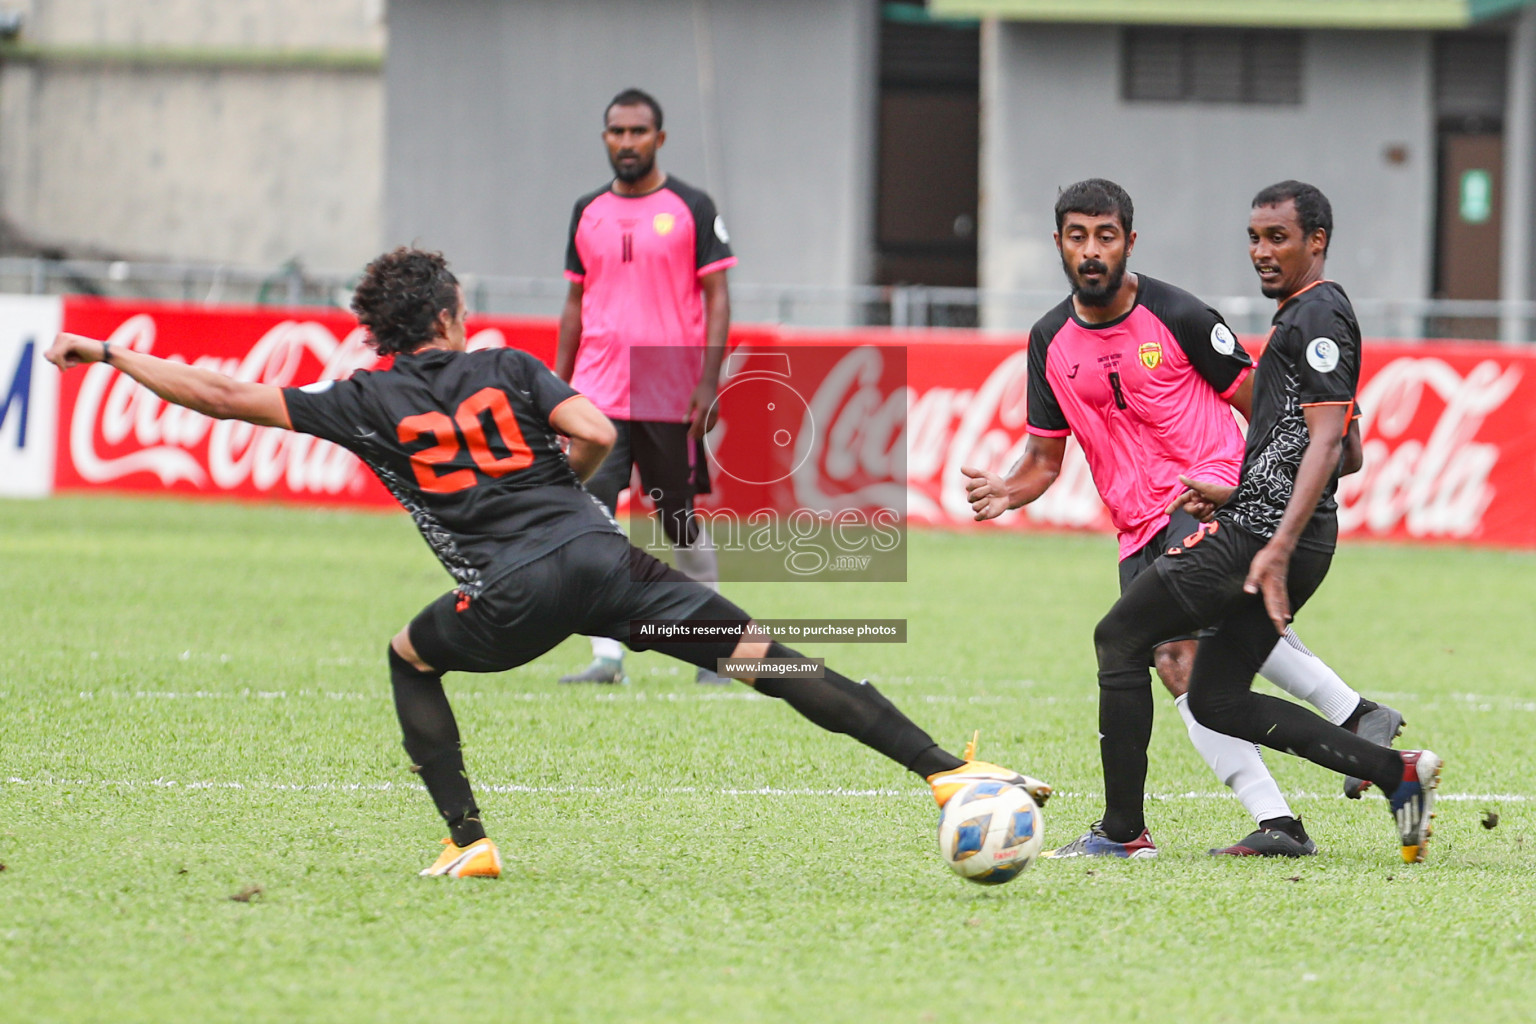 Club Eagles vs United Victory in Dhiraagu Dhivehi Premier League 2020-21 on 09 January 2021 held in Male', Maldives